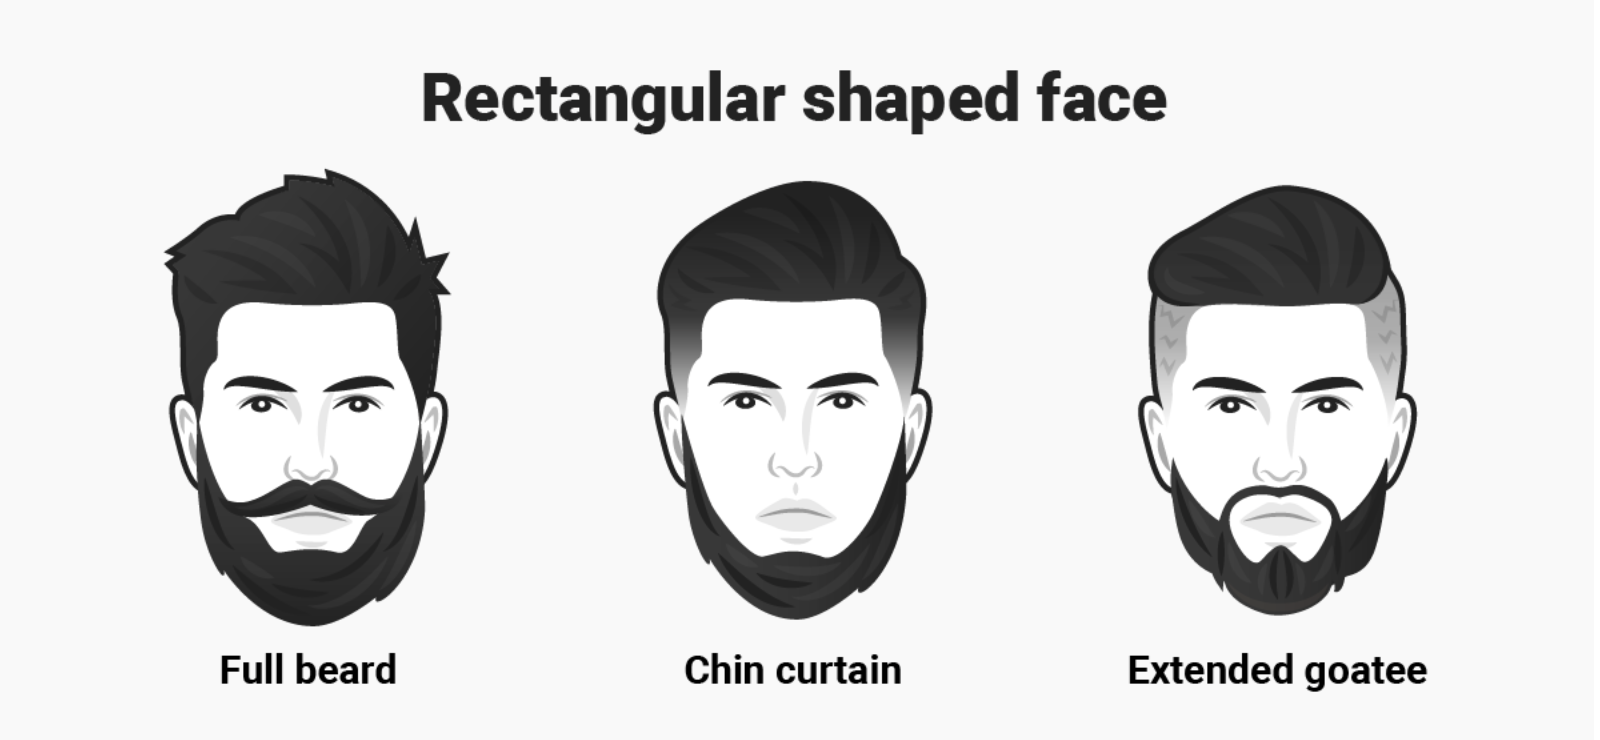 barbe-rectangulaire